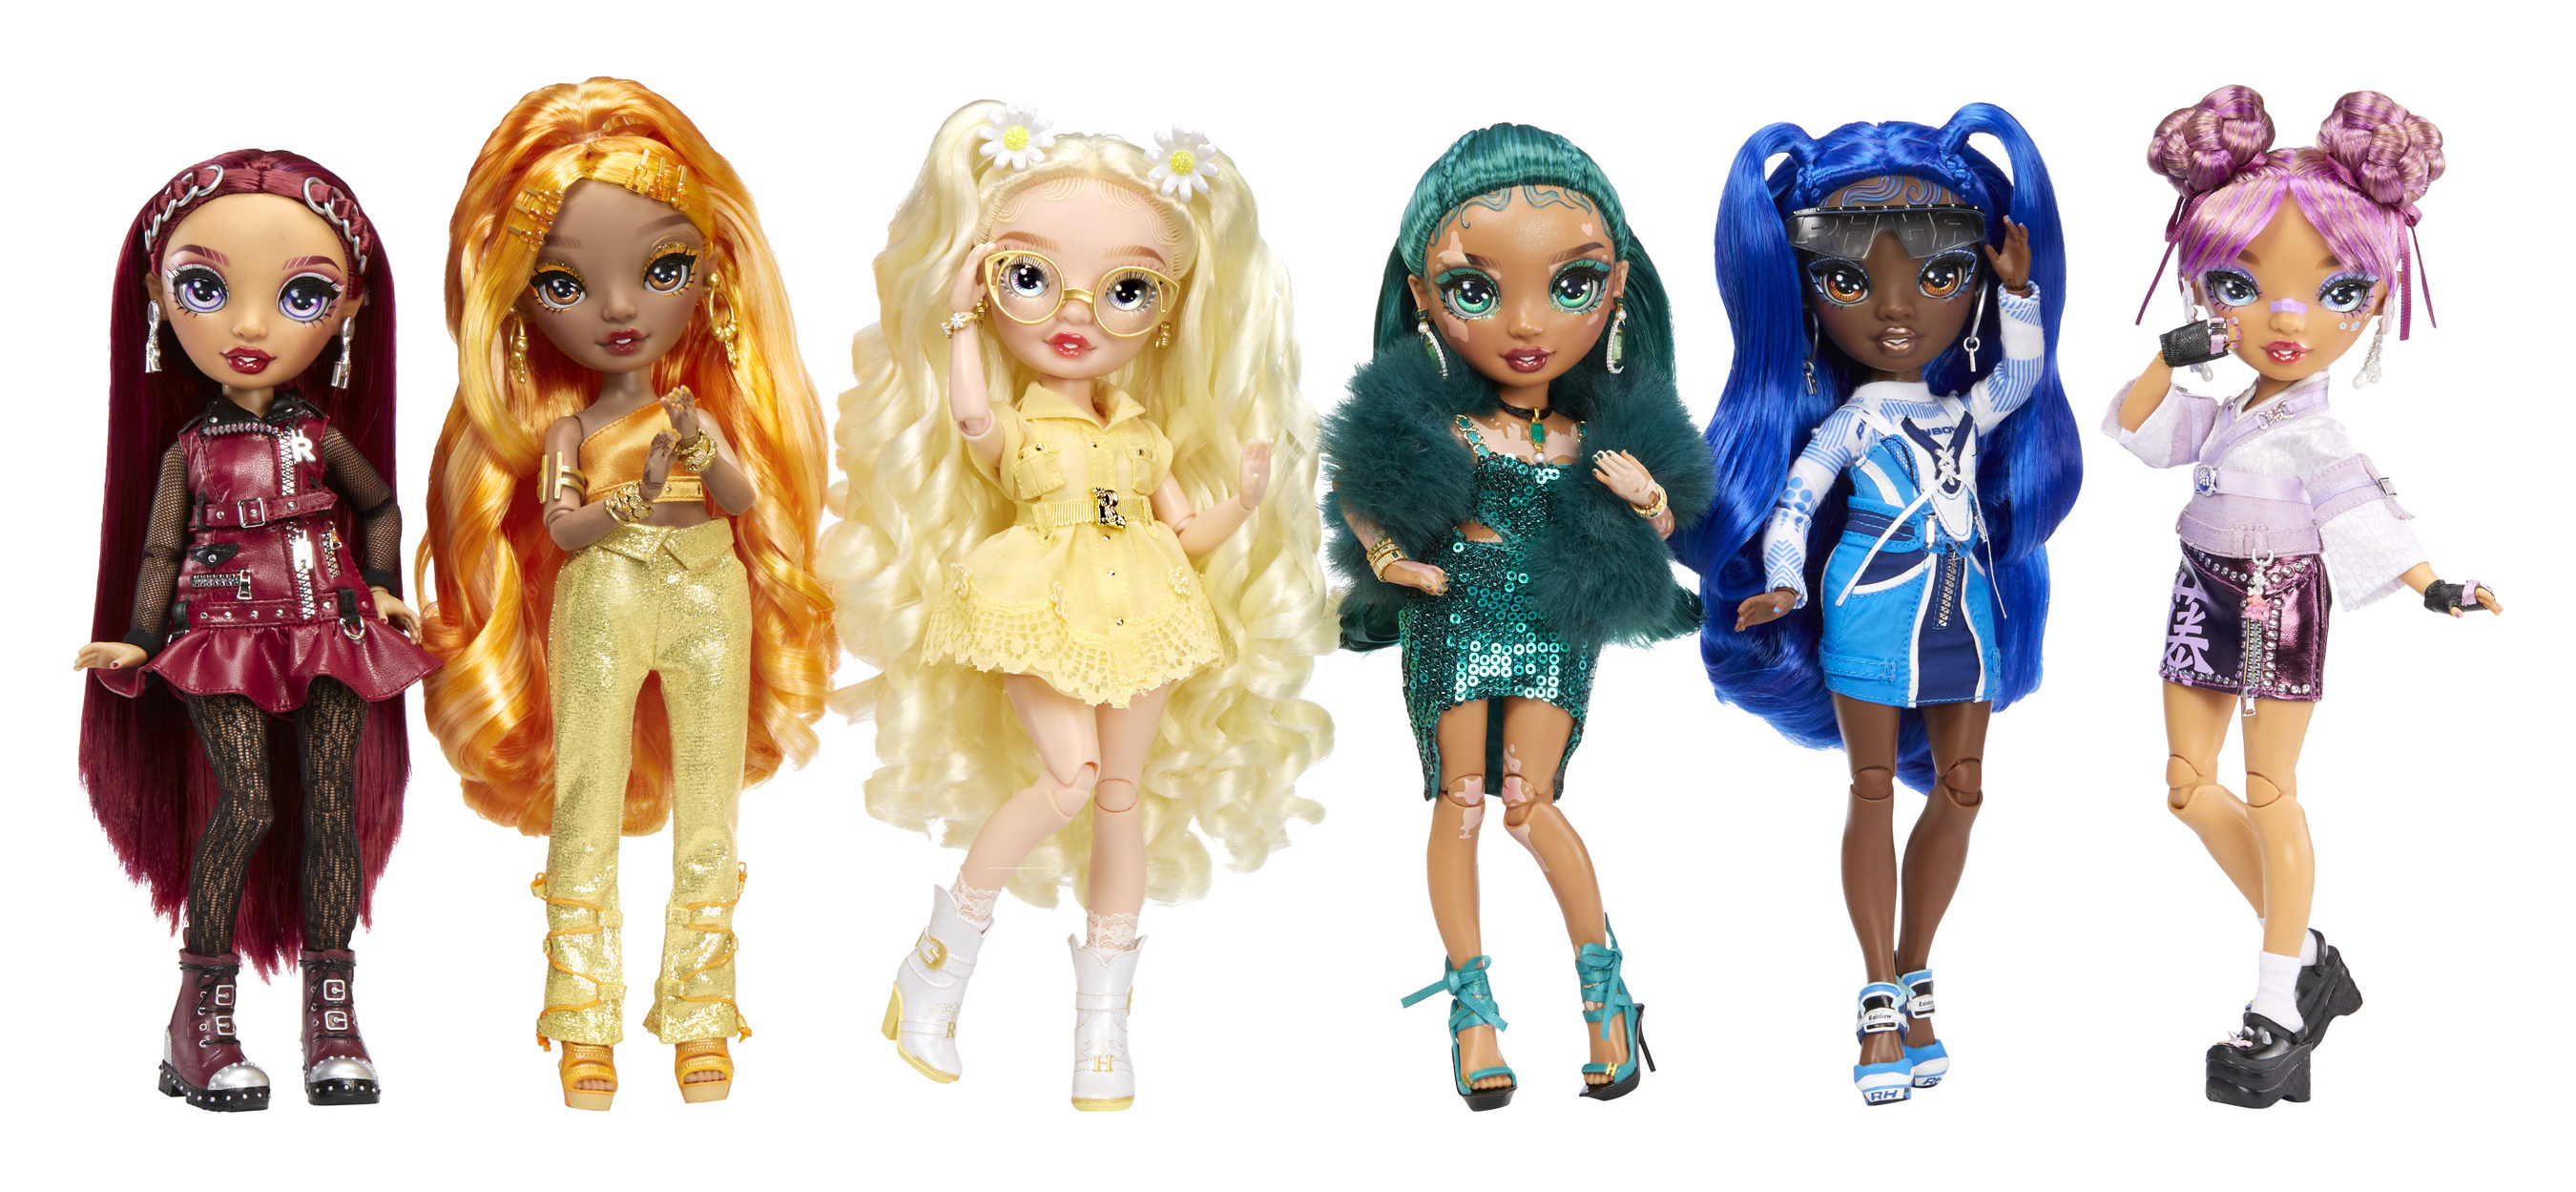 New Rainbow High fashion dolls show their 'true colors,' one has albinism,  one has vitiligo 